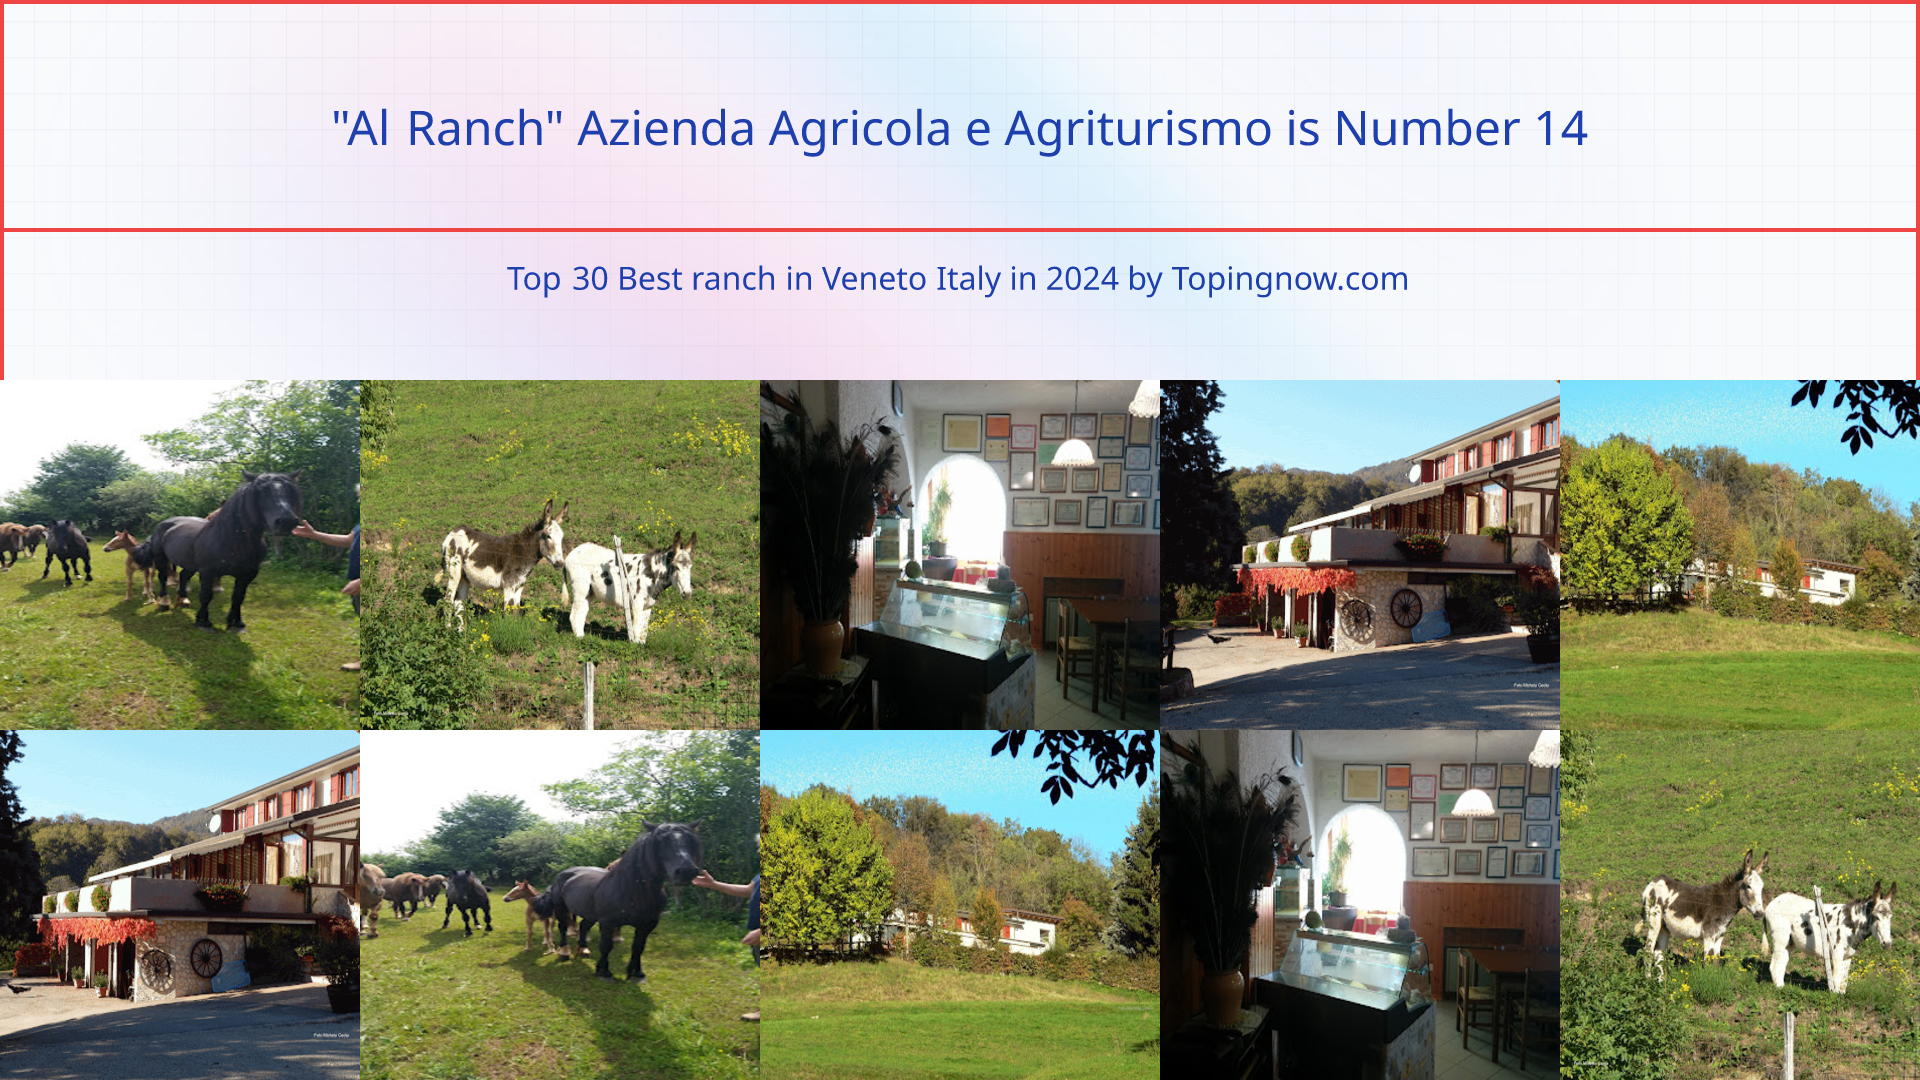 "Al Ranch" Azienda Agricola e Agriturismo: Top 30 Best ranch in Veneto Italy in 2024